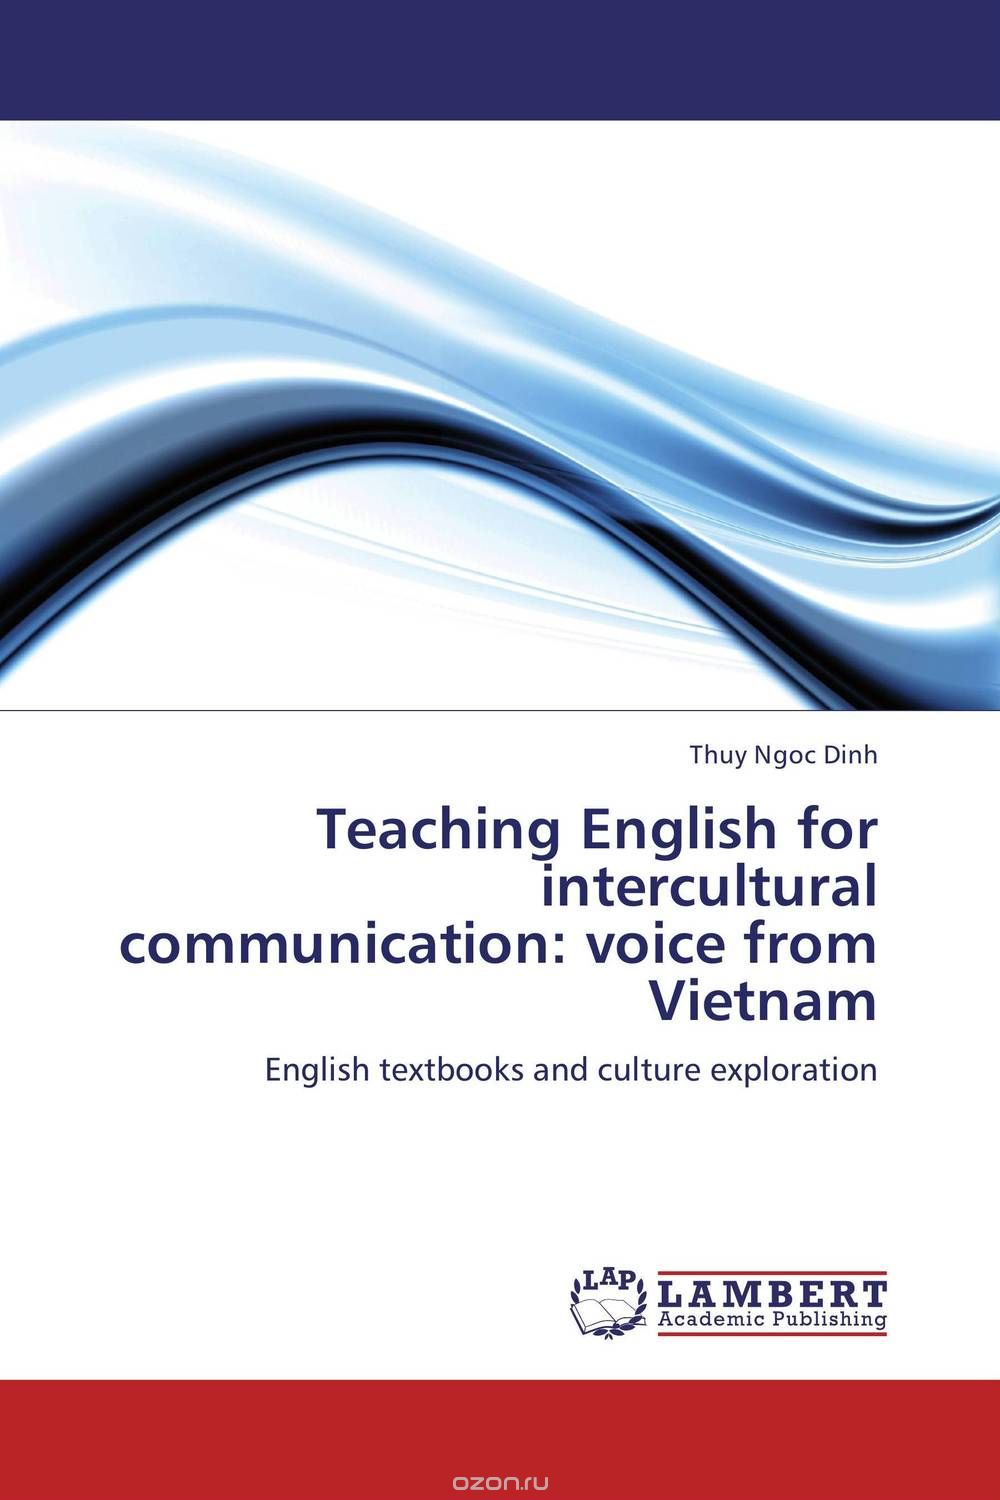 Скачать книгу "Teaching English for intercultural communication: voice from Vietnam"